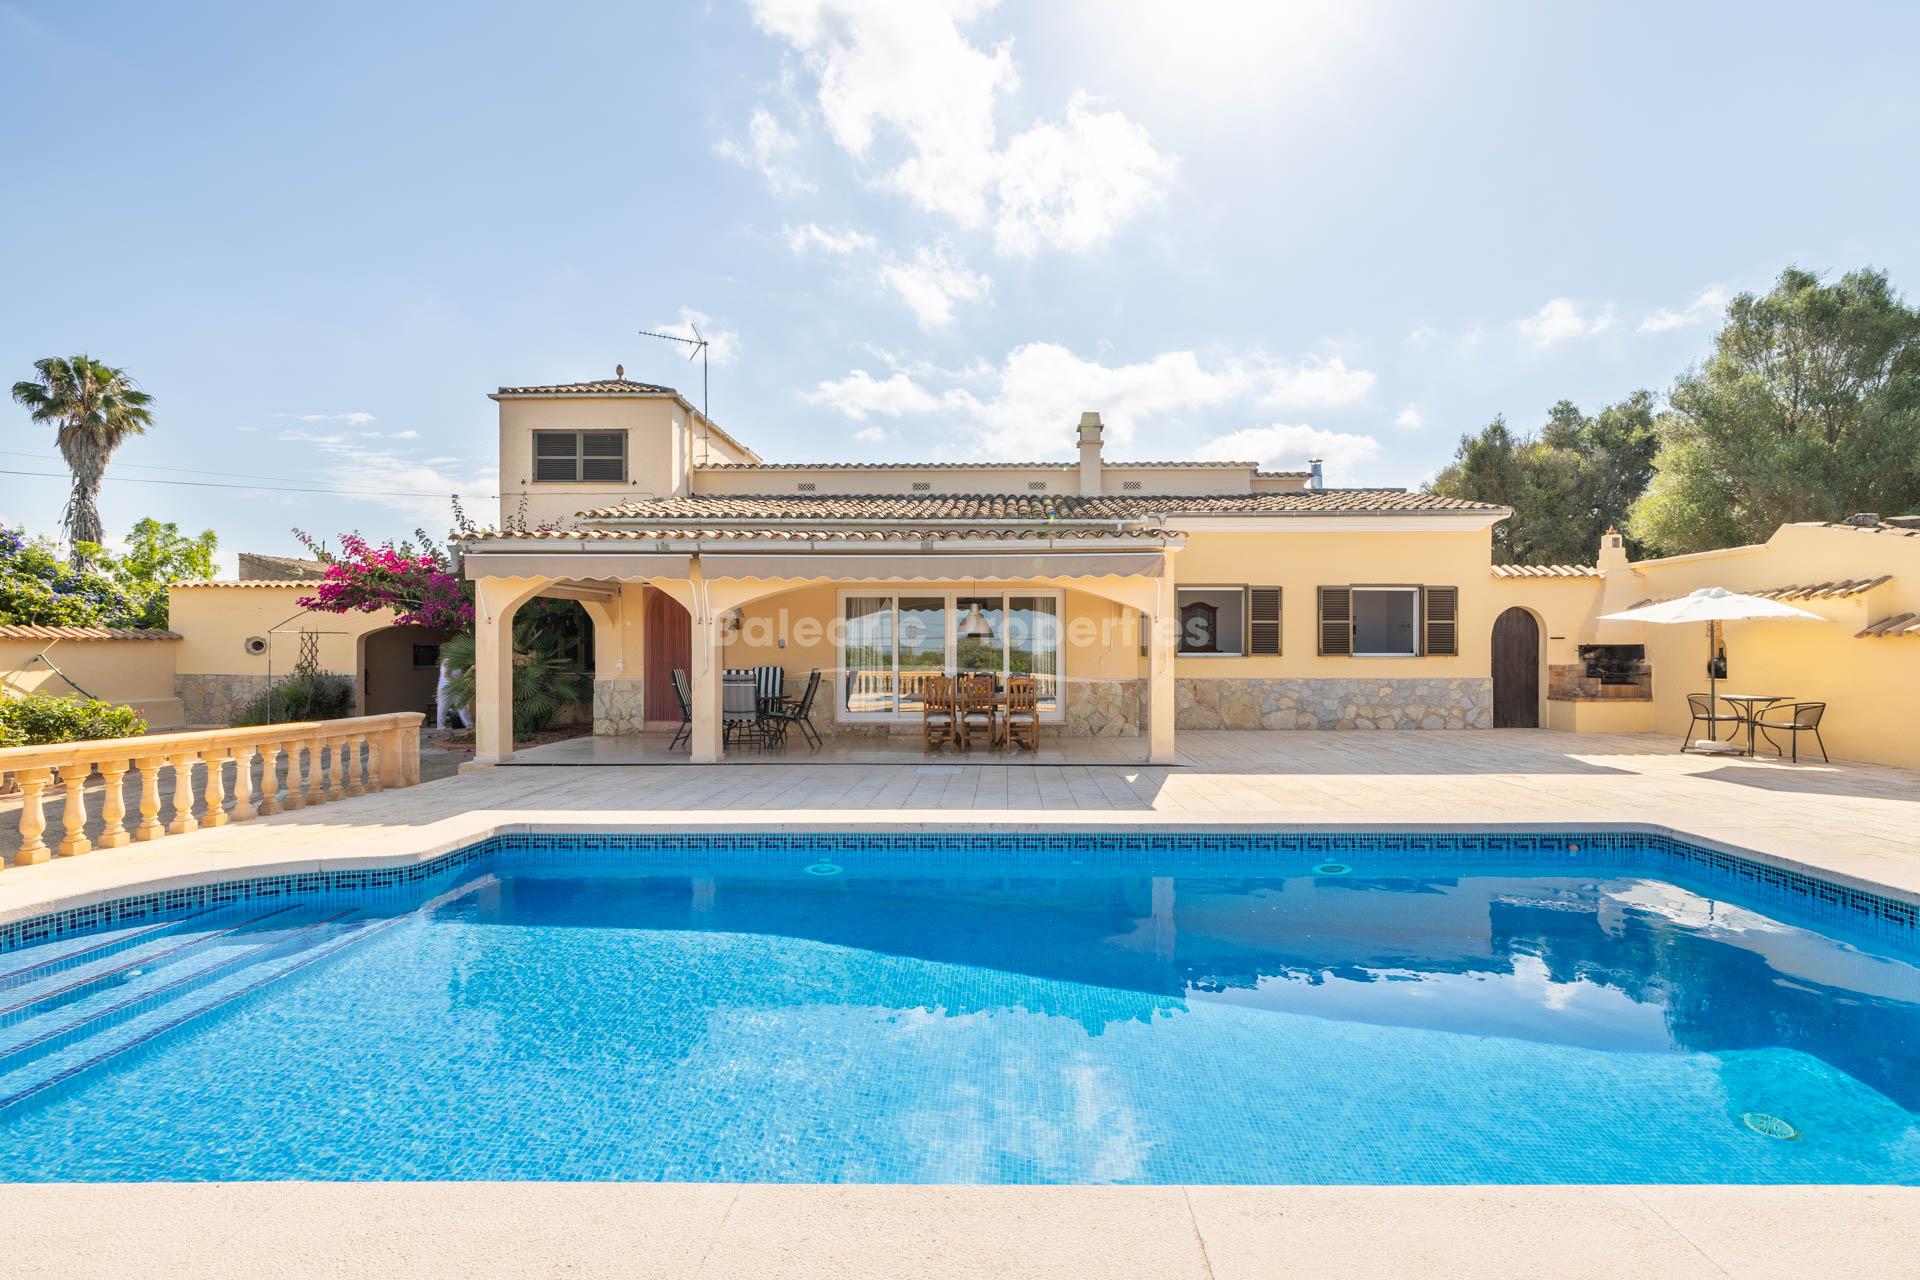 Delightful rural finca with guest apartment for sale in Algaida, Mallorca